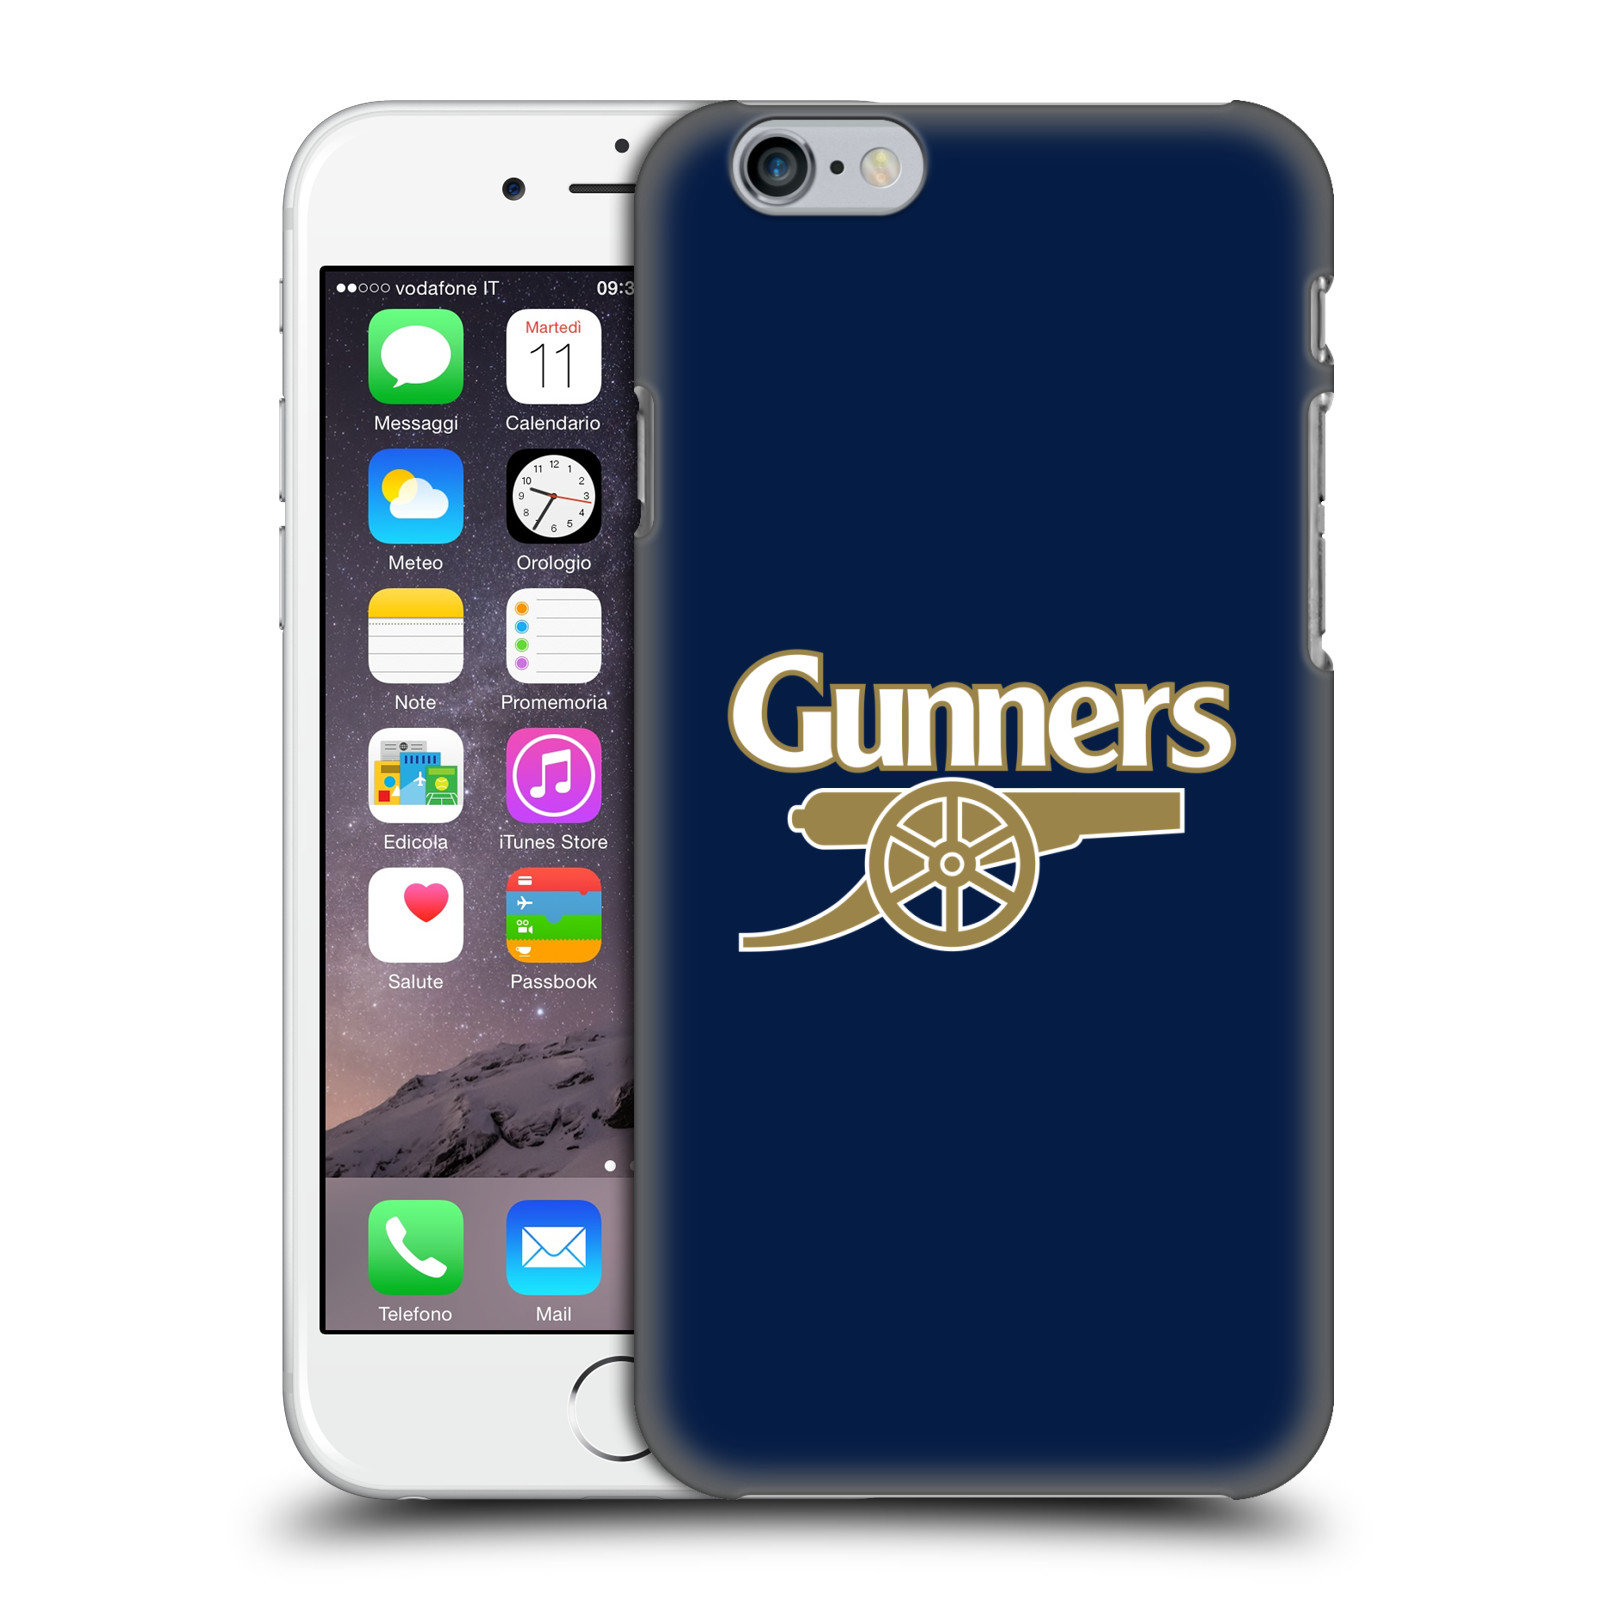 Plastové pouzdro na mobil Apple iPhone 6 - Head Case - Arsenal FC - Gunners (Plastový kryt či obal na mobilní telefon s motivem klubu Arsenal FC - Gunners pro Apple iPhone 6)